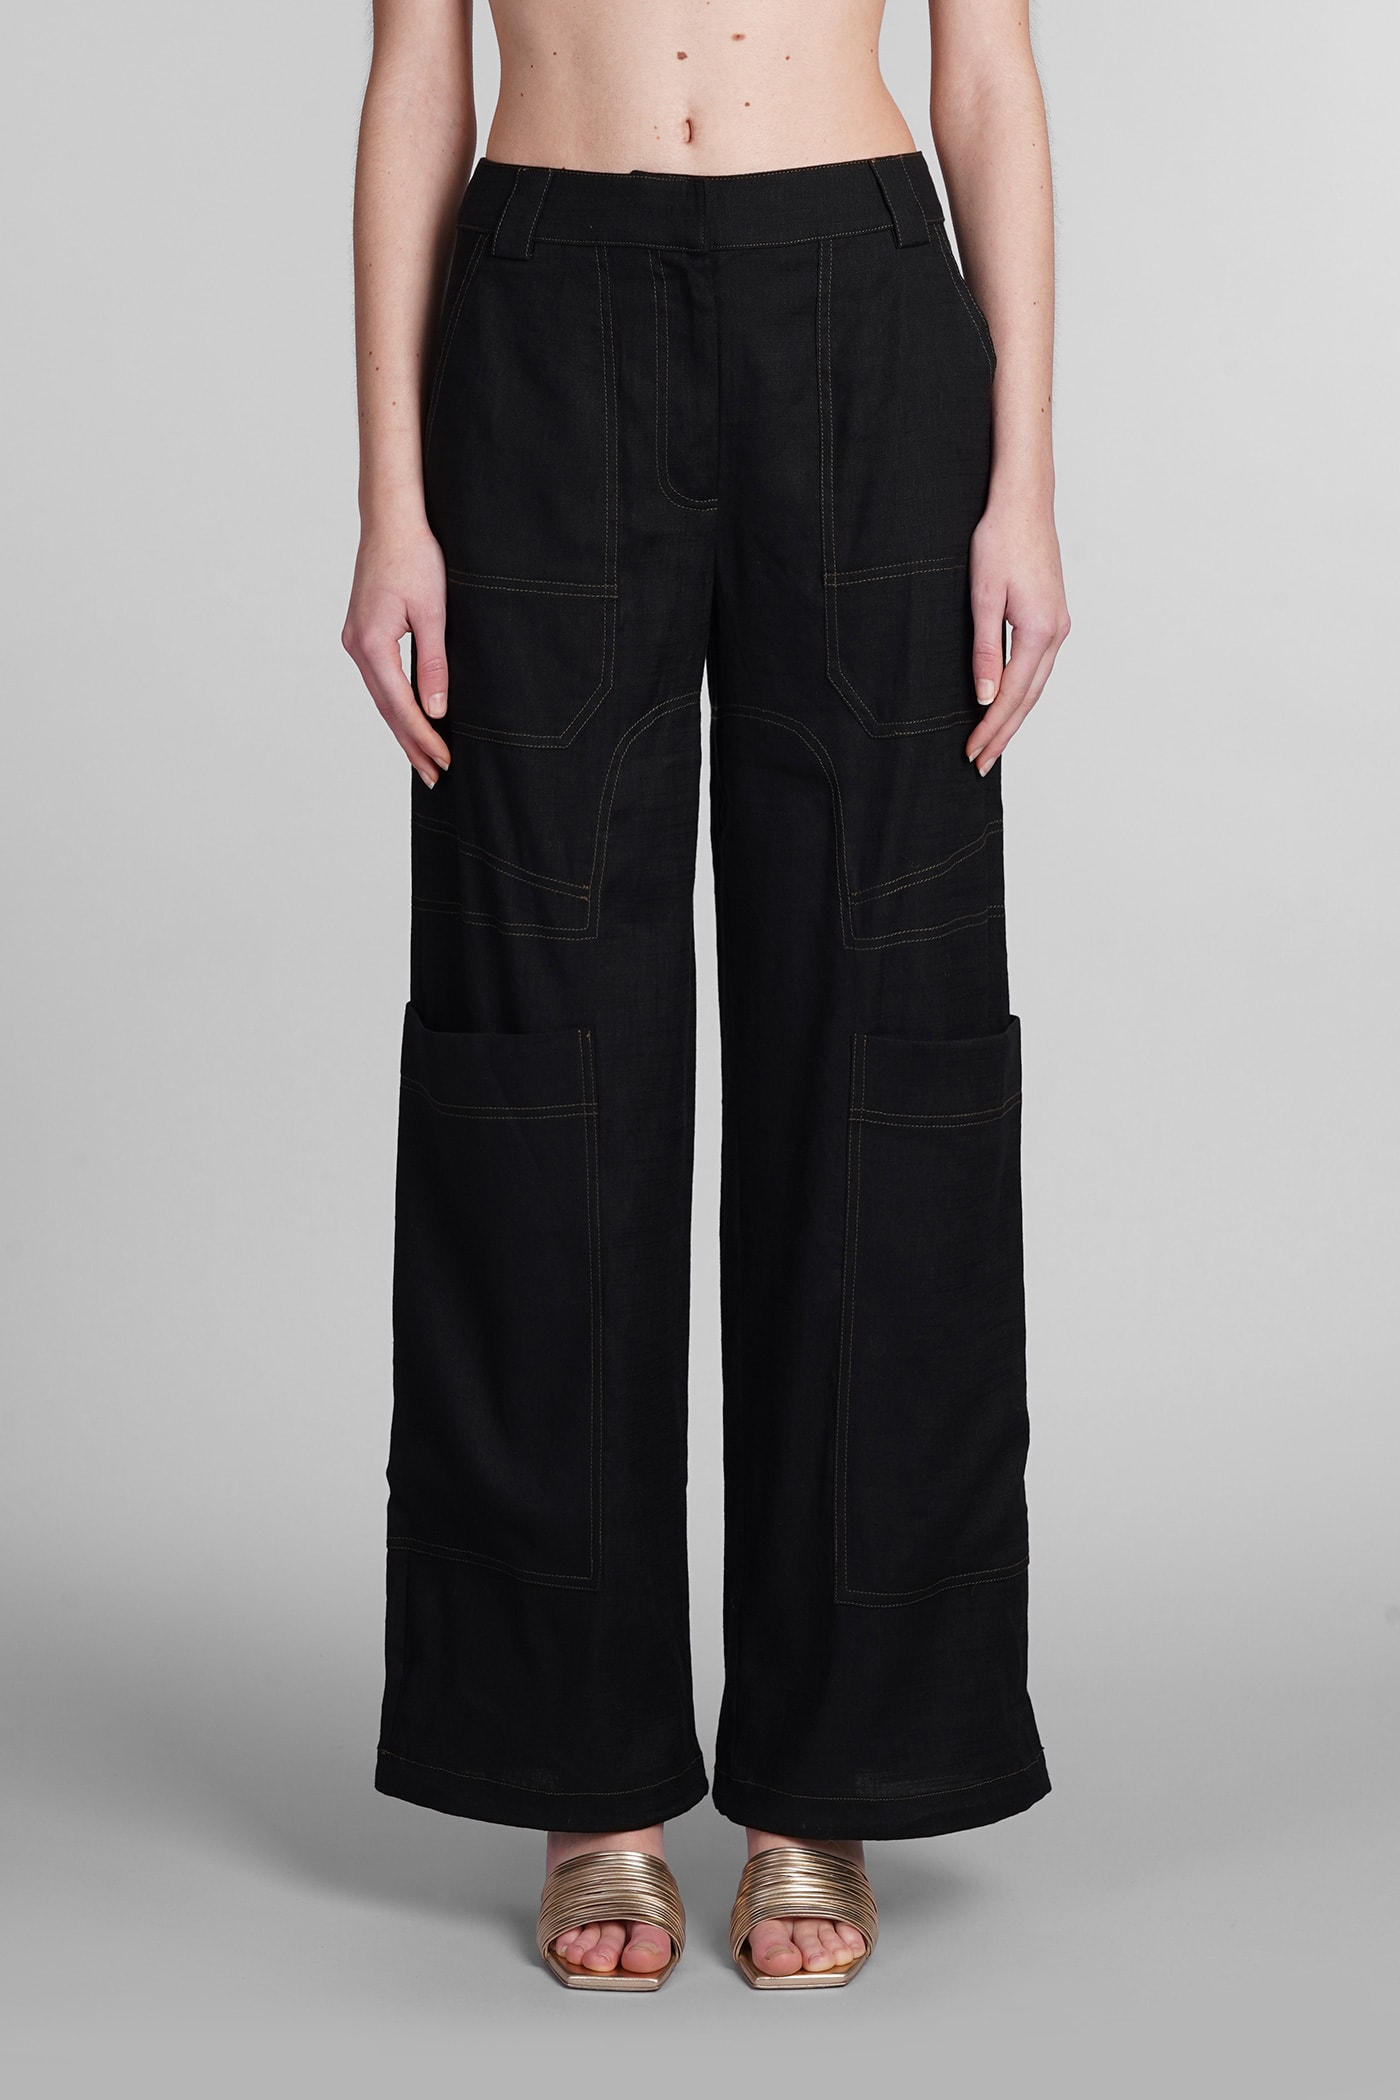 Cult Gaia Wynn Pants In Black Linen